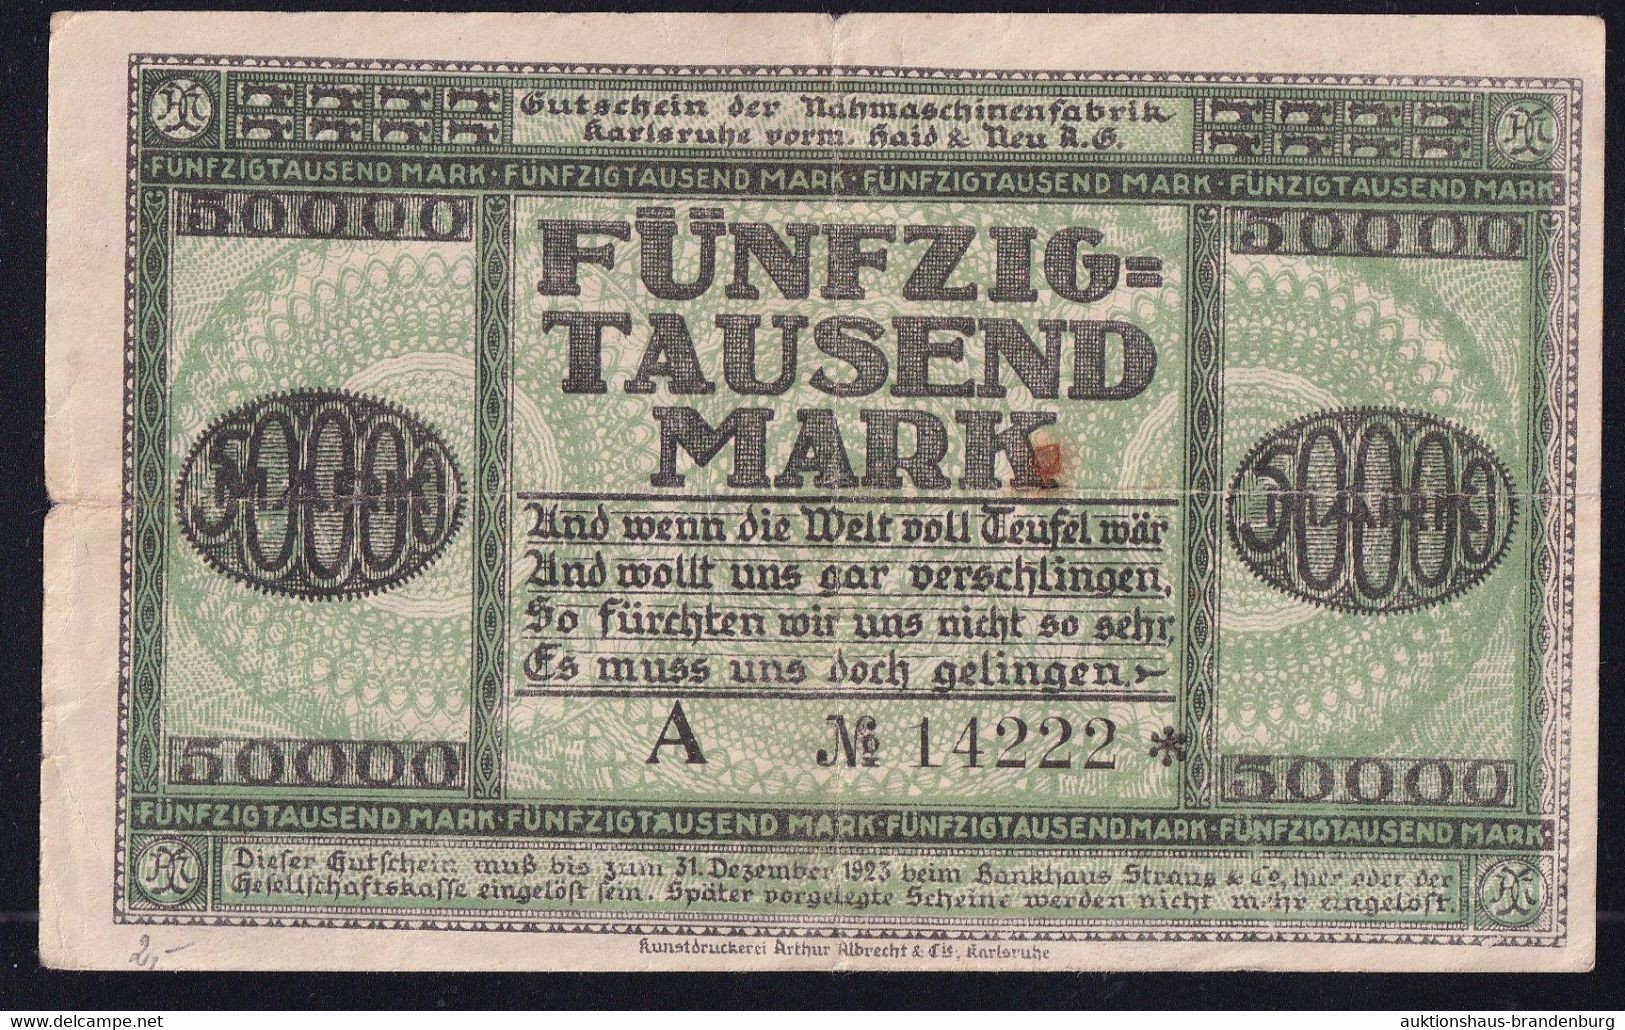 Karlsruhe: 50.000 Mark 1.8.1923 - Nähmaschinenfabrik - [11] Local Banknote Issues